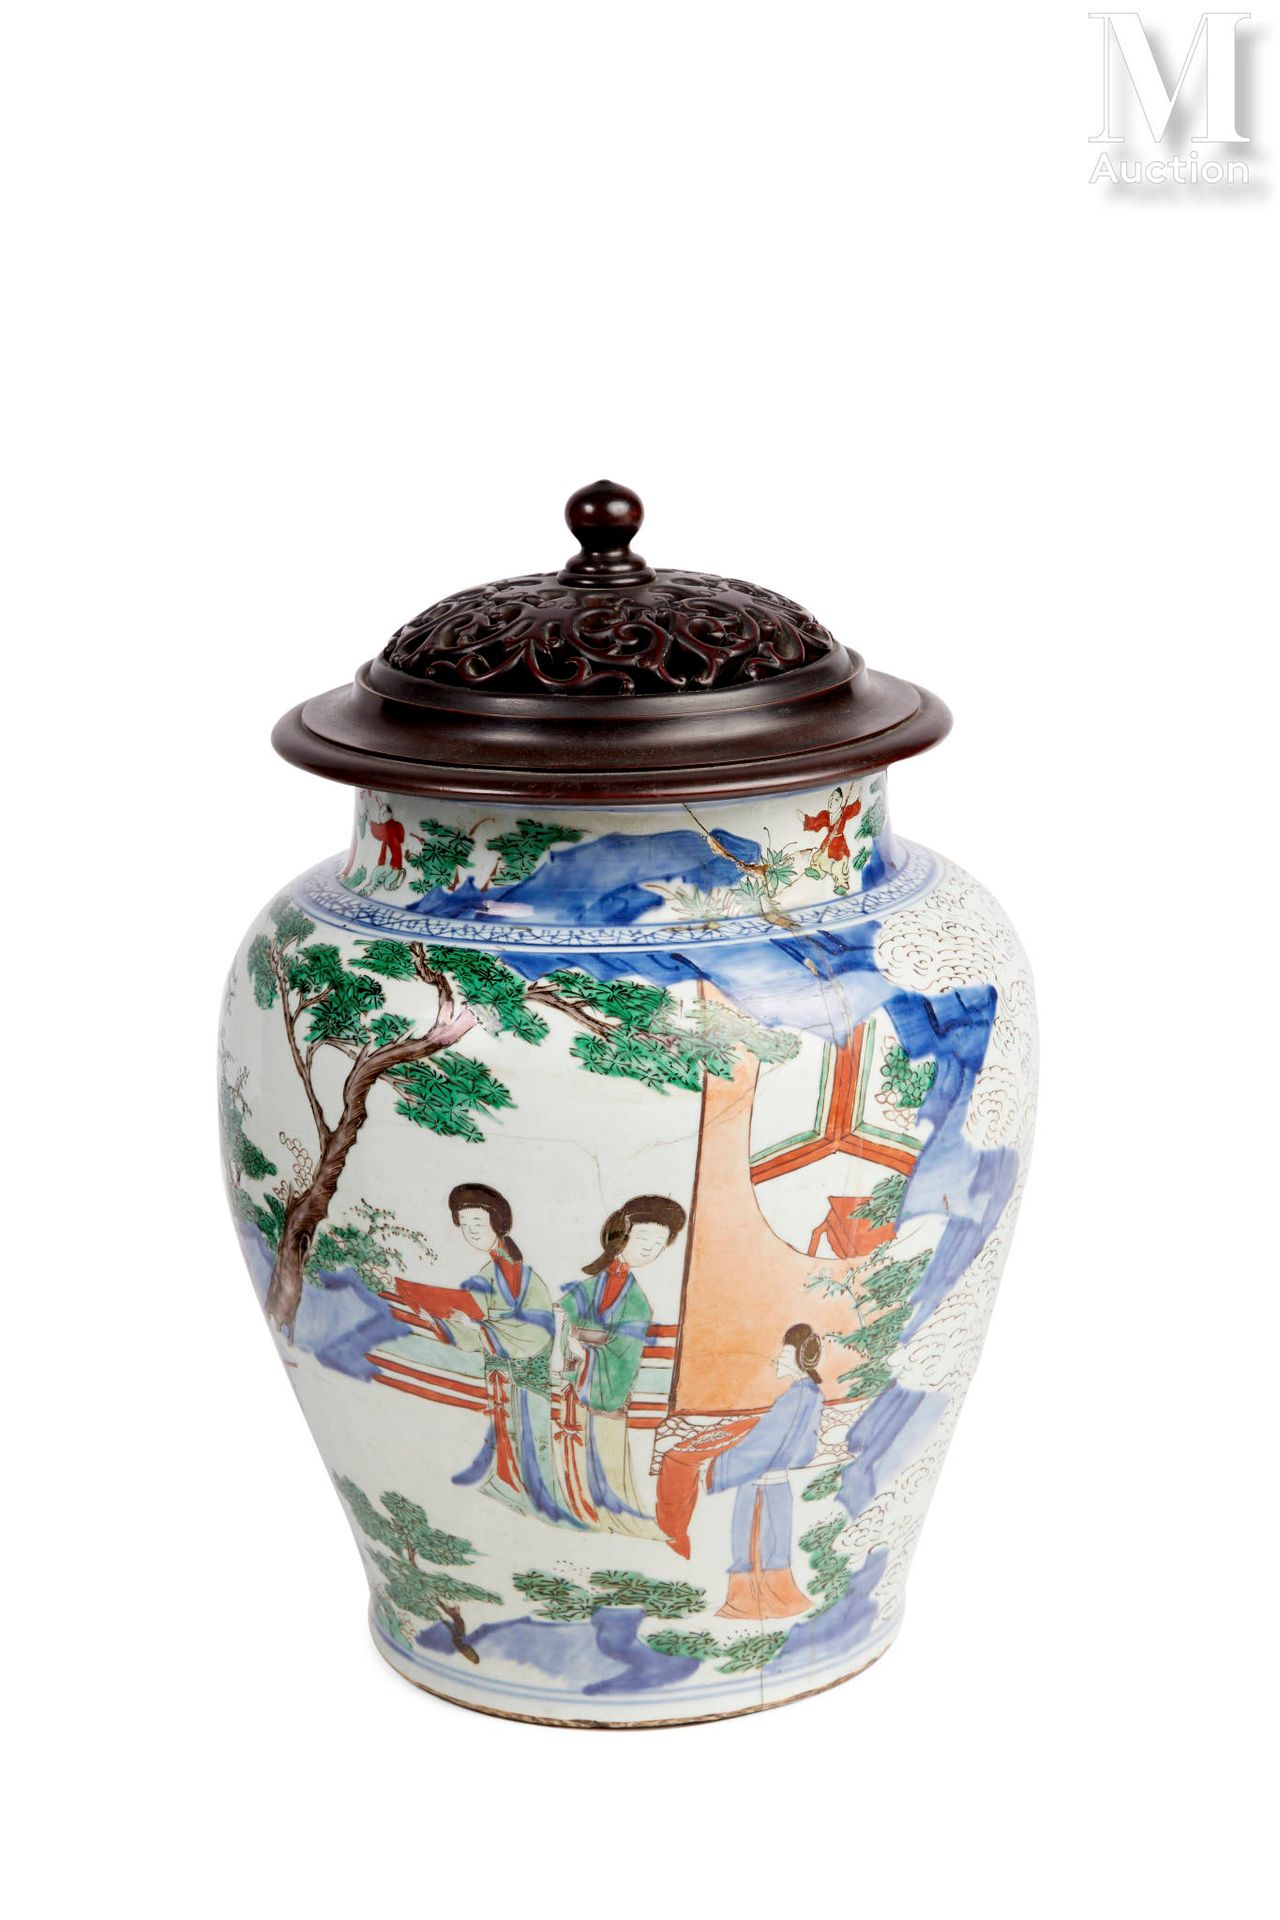 CHINE, Epoque Transition, XVIIe siècle Gran jarrón de porcelana

con base curvad&hellip;